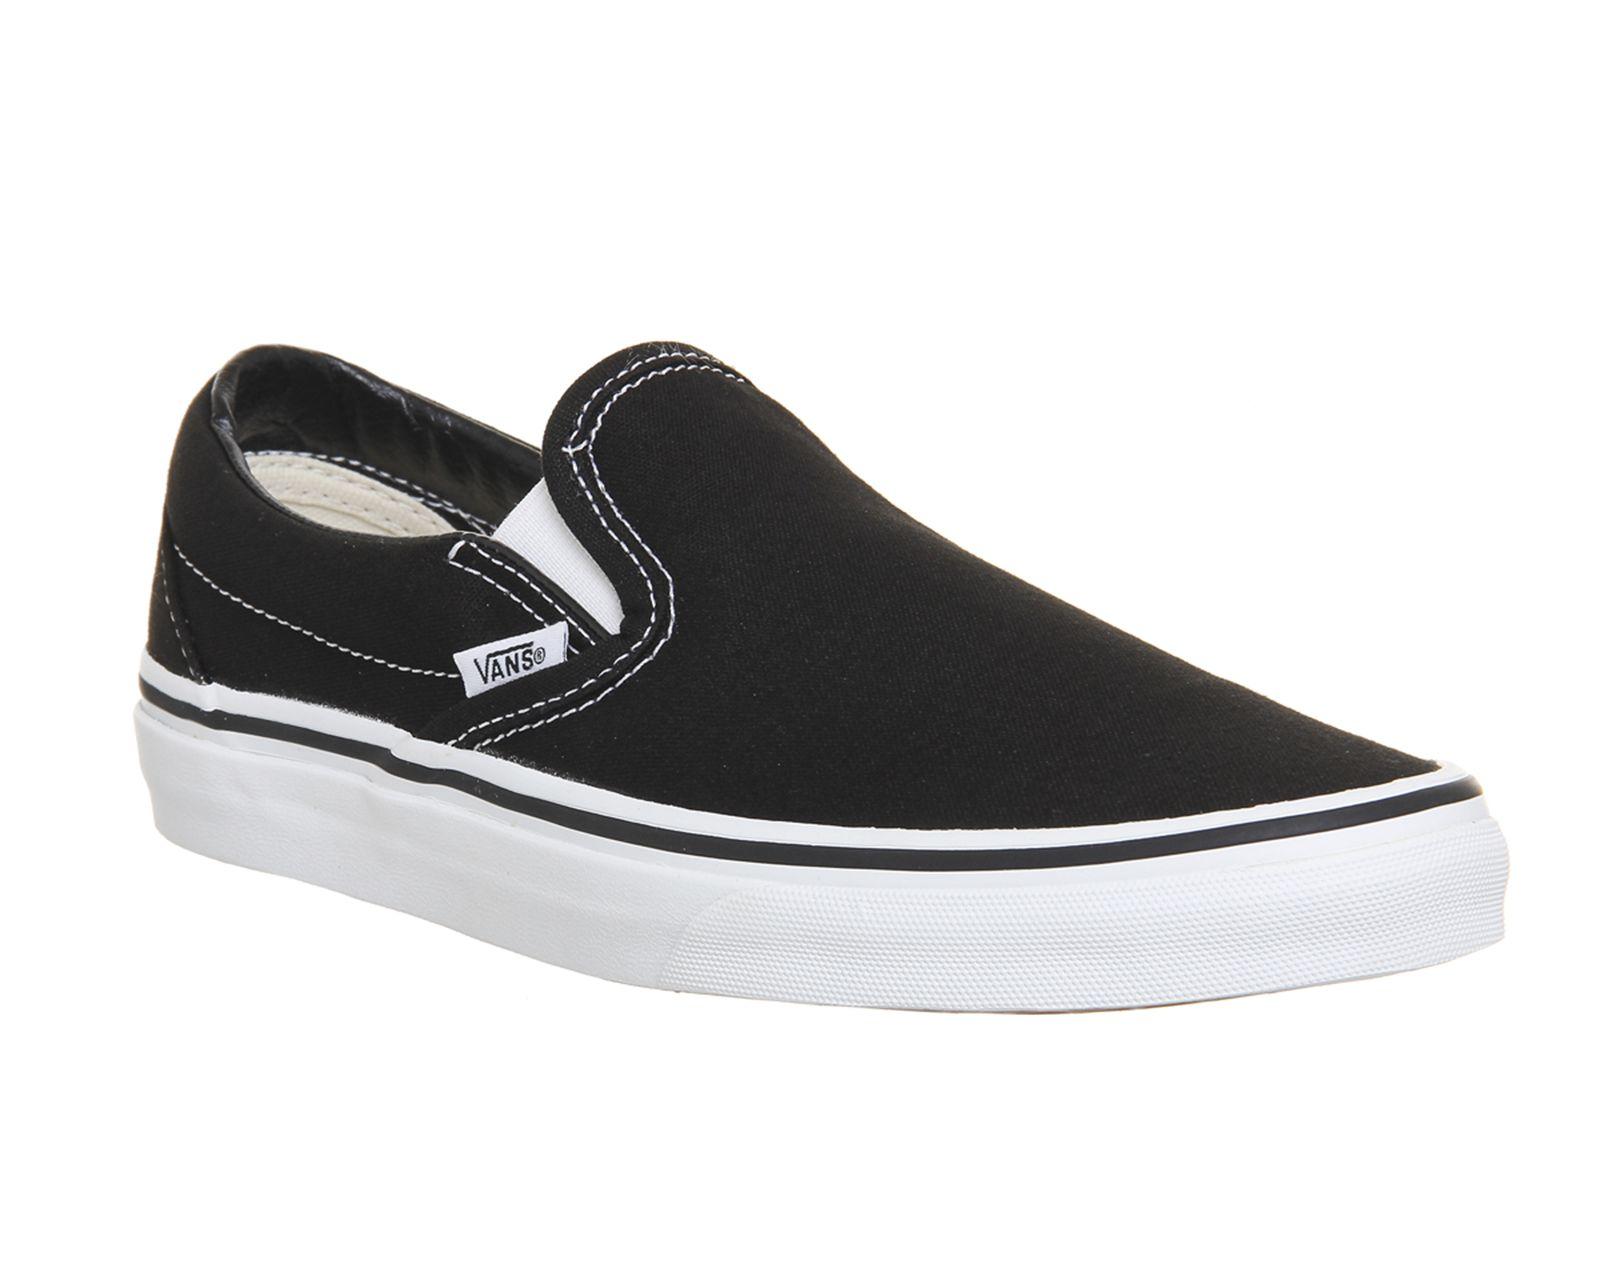 Black and White Vans Shoes Logo - Vans Classic Slip On Shoes Black White - Unisex Sports